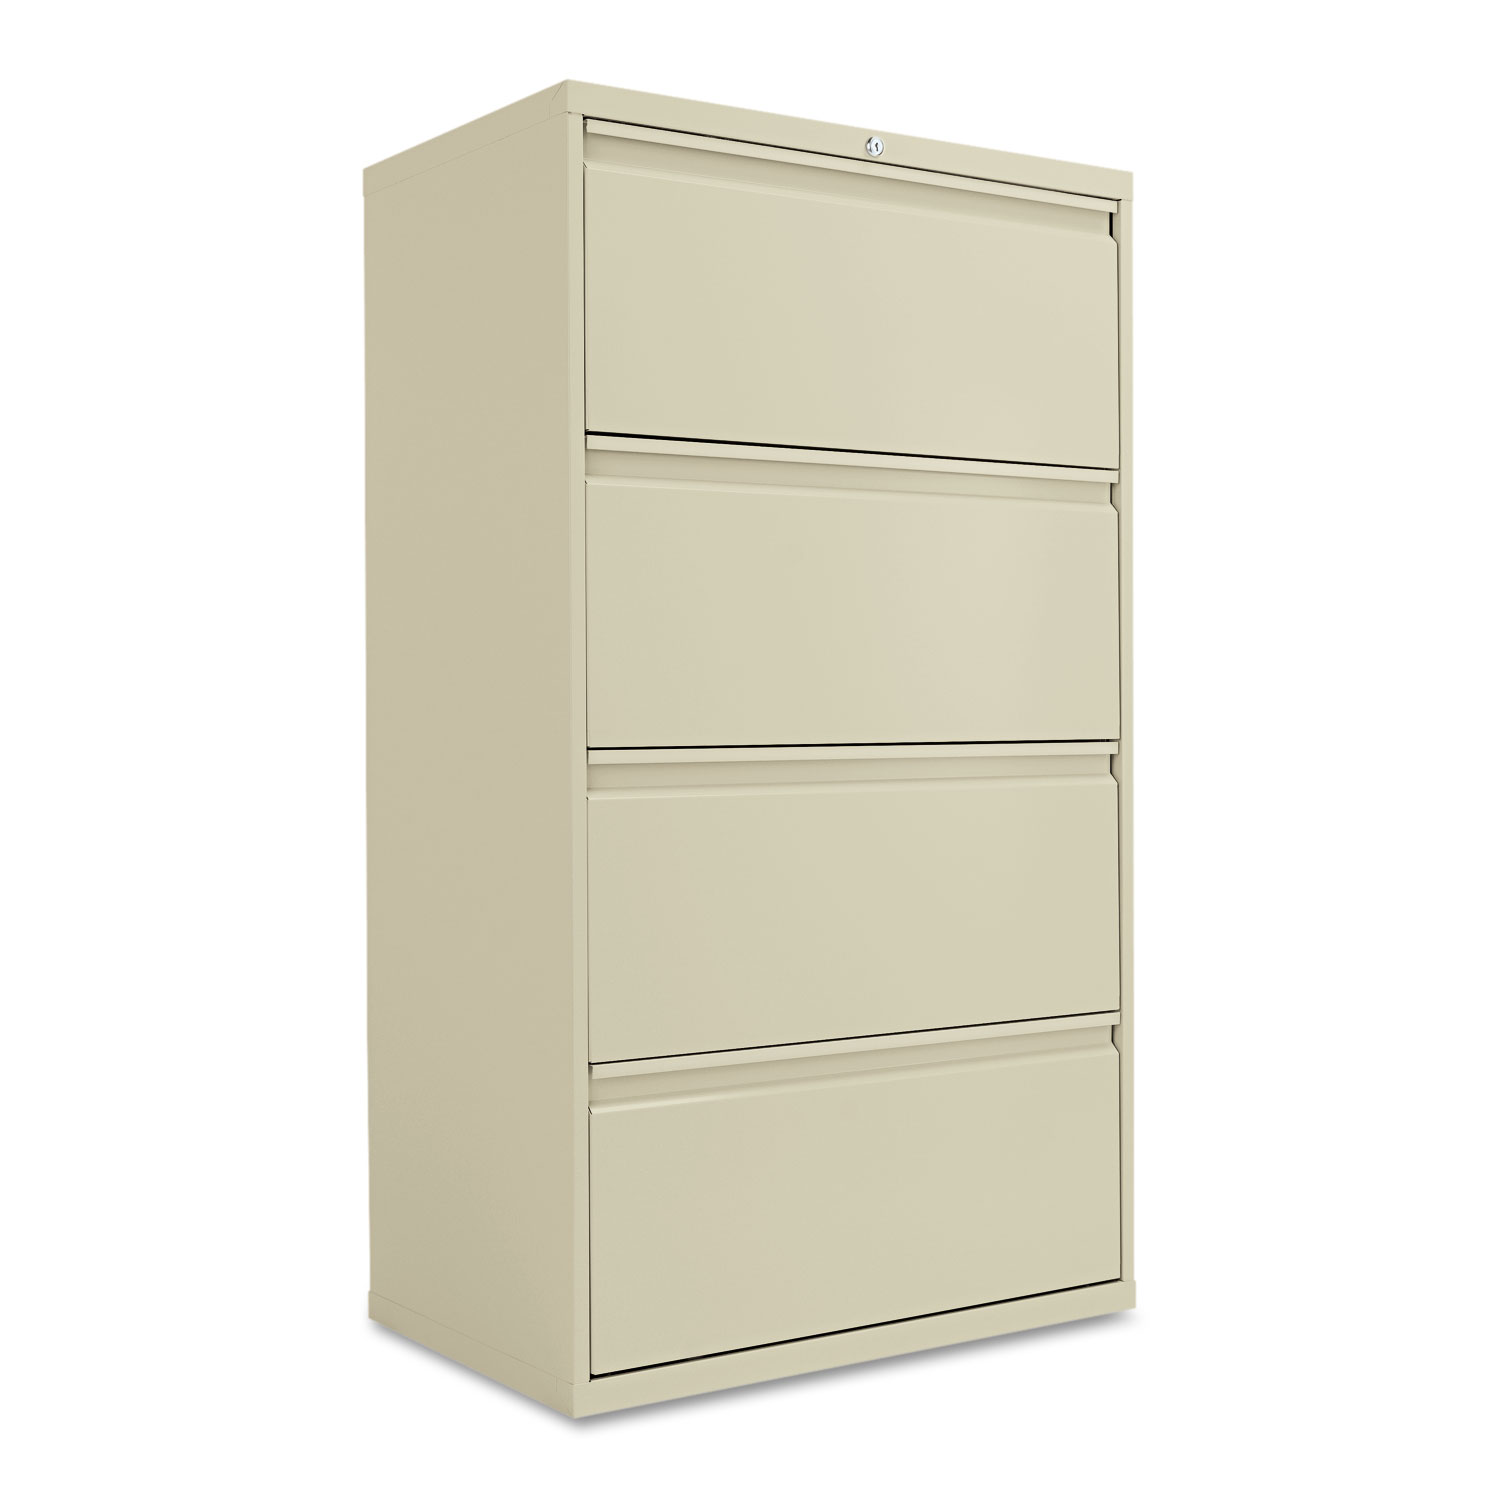  Alera ALELF3054PY Four-Drawer Lateral File Cabinet, 30w x 18d x 52.5h, Putty (ALELF3054PY) 